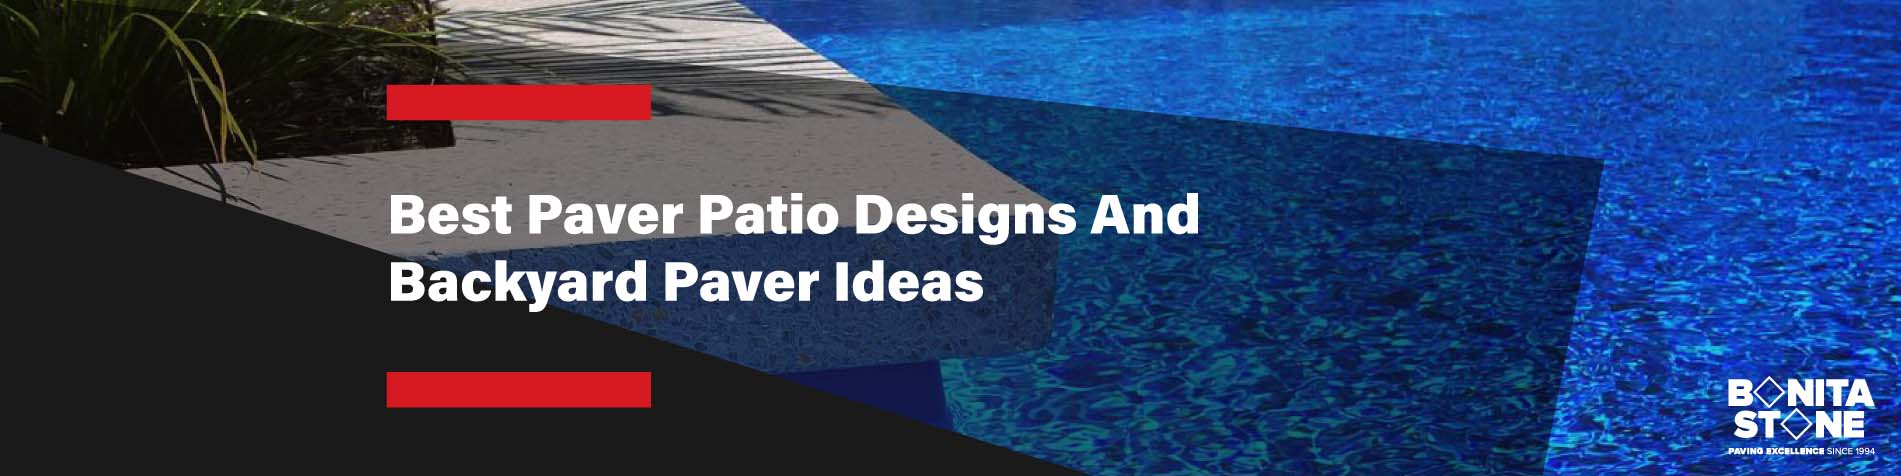 paver-patio-designs-bs-banner